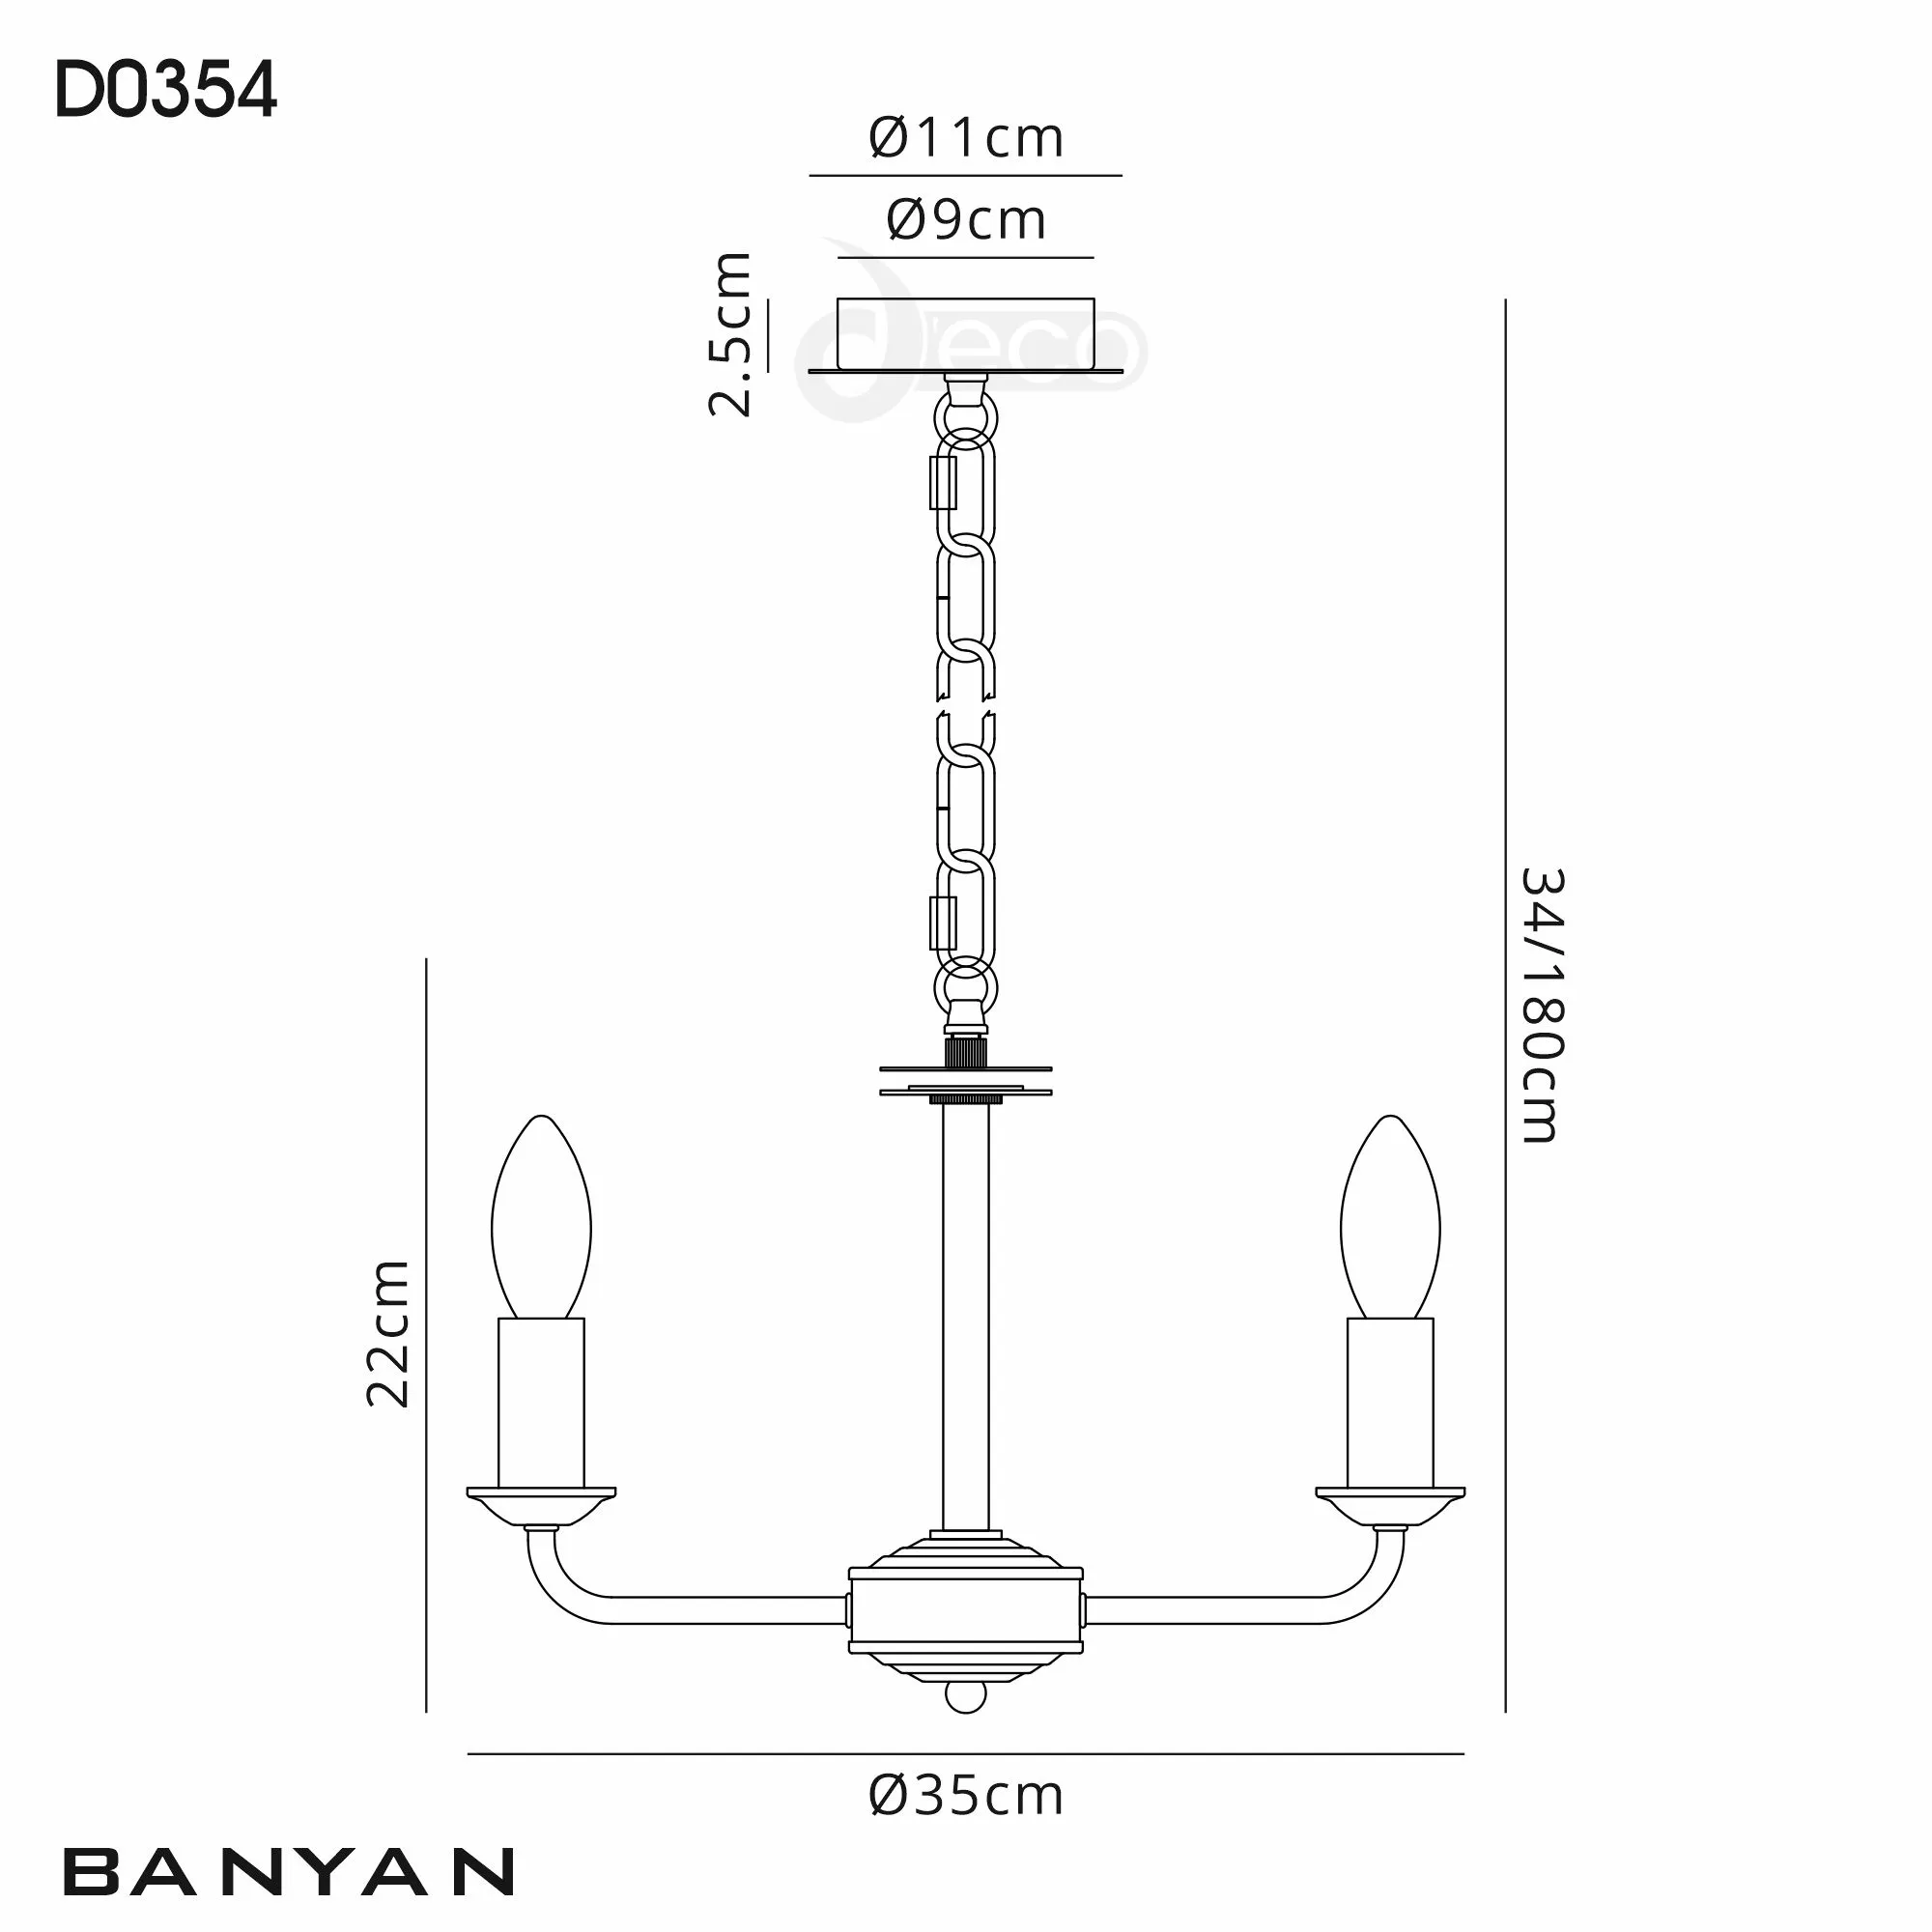 Banyan 45cm 3 Light Pendant Polished Chrome; Taupe/Halo Gold DK0016  Deco Banyan CH TA